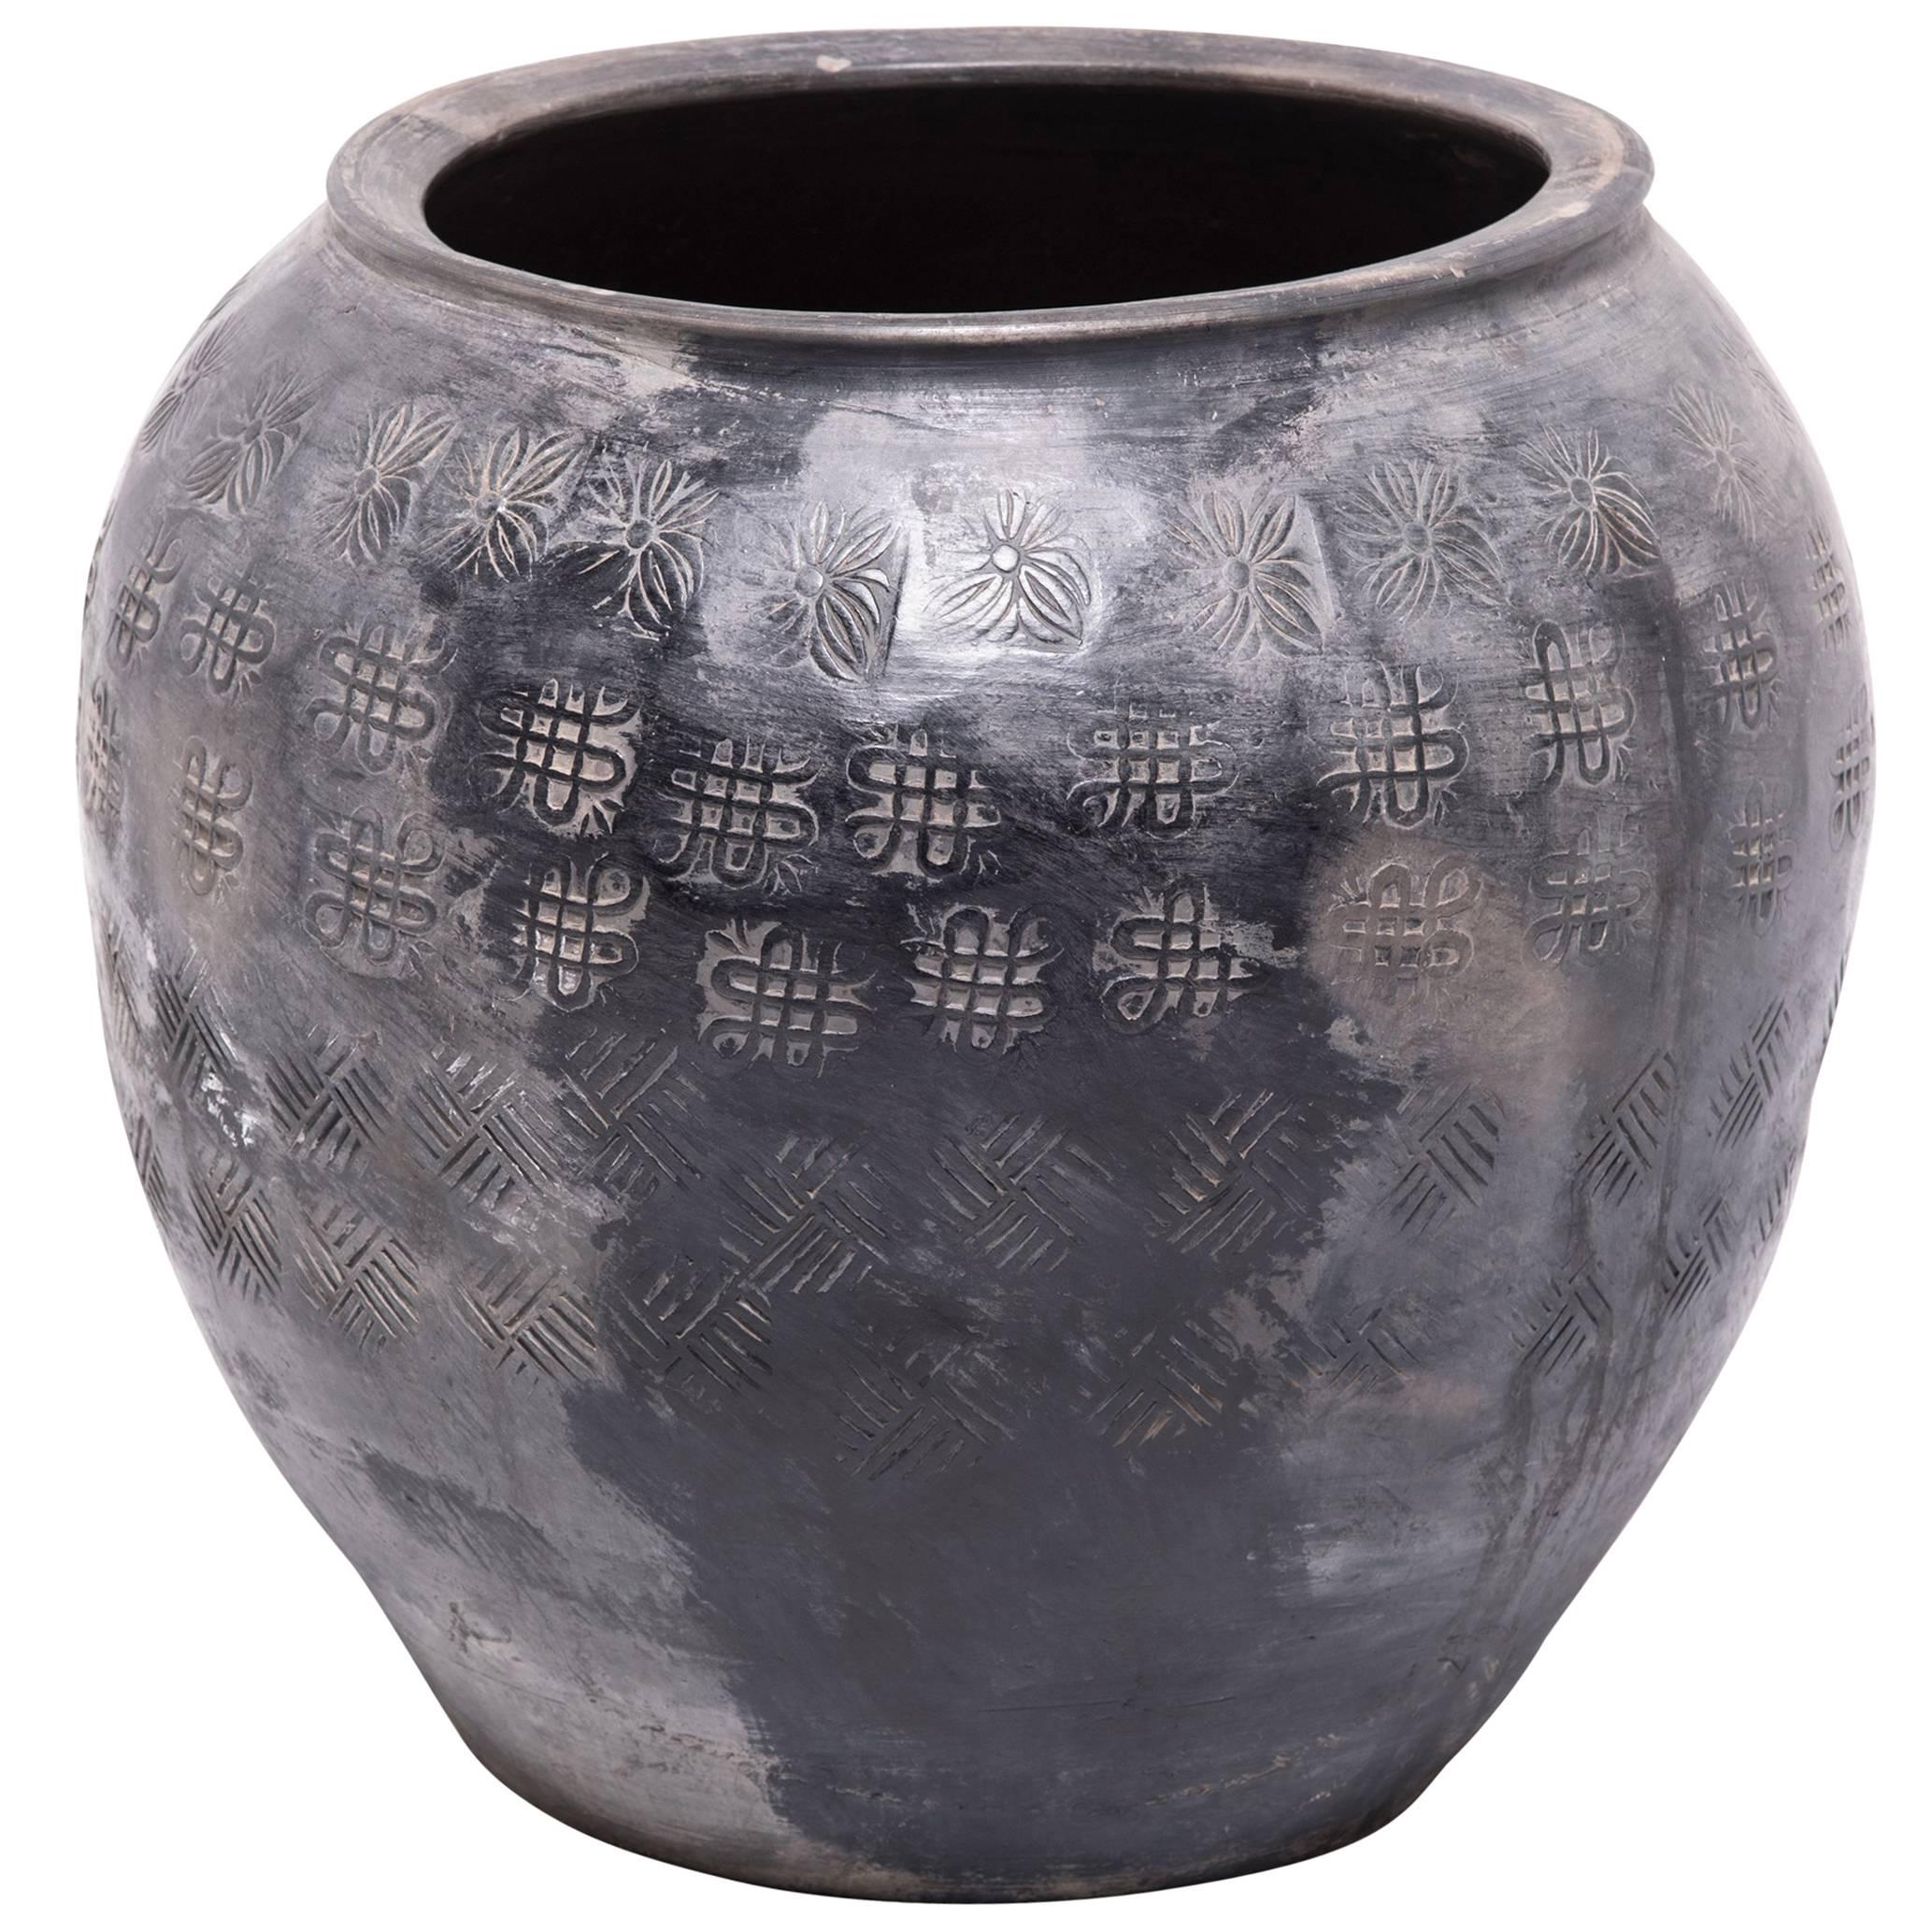 Chinese Unglazed Stamped Clay Jar